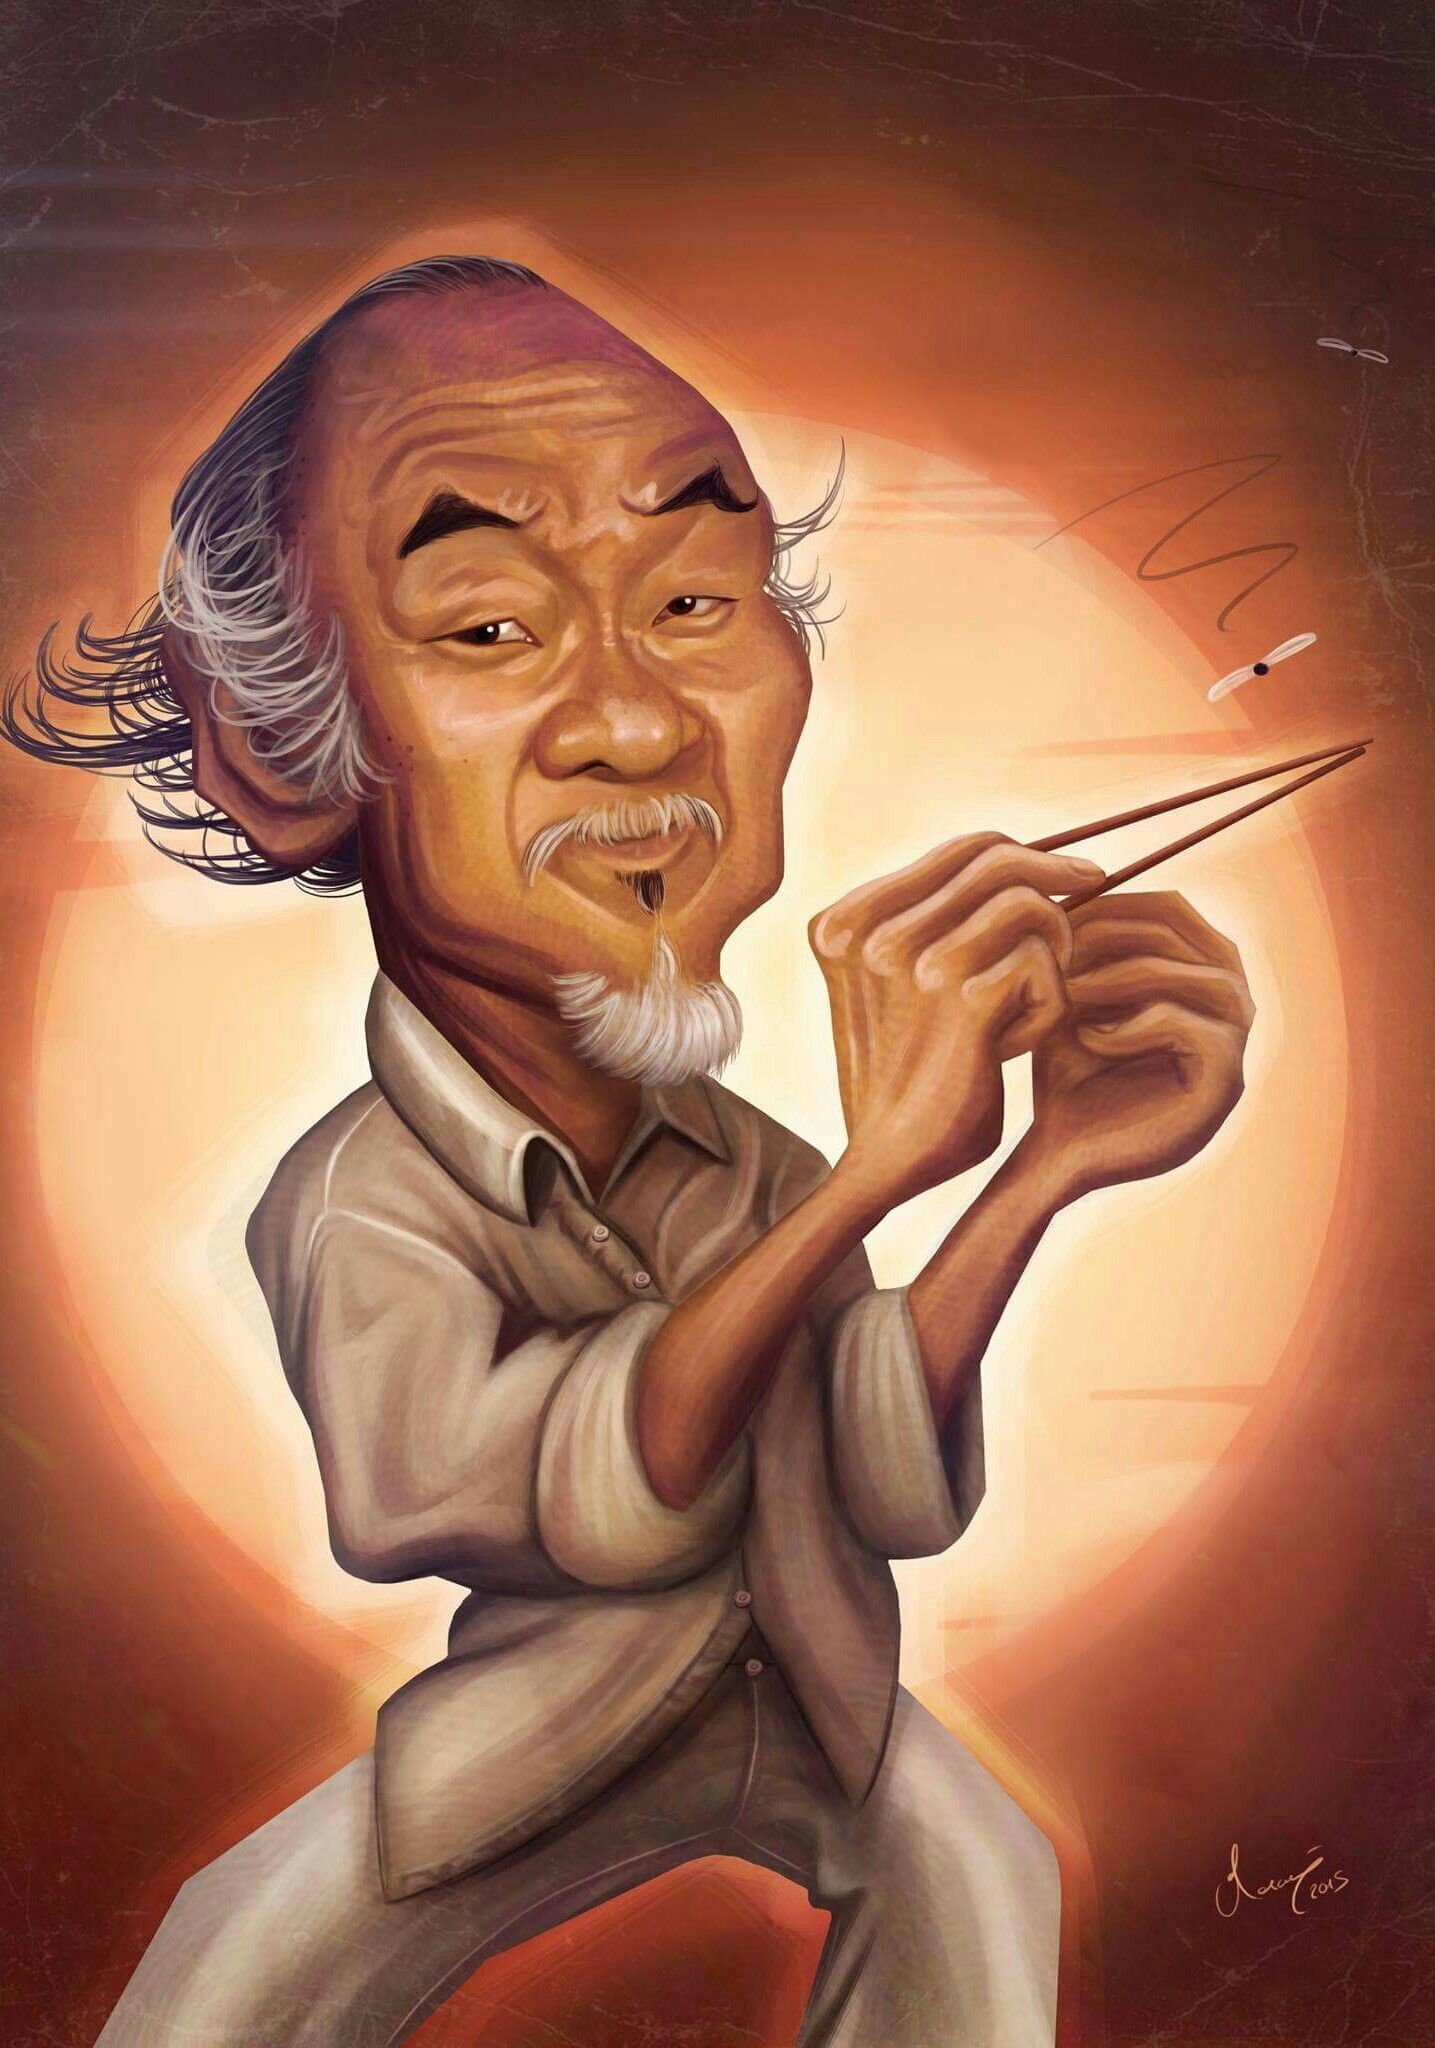 MR. MIYAGI FROM THE KARATE KID. Caricature sketch, Caricature artist, Caricature drawing